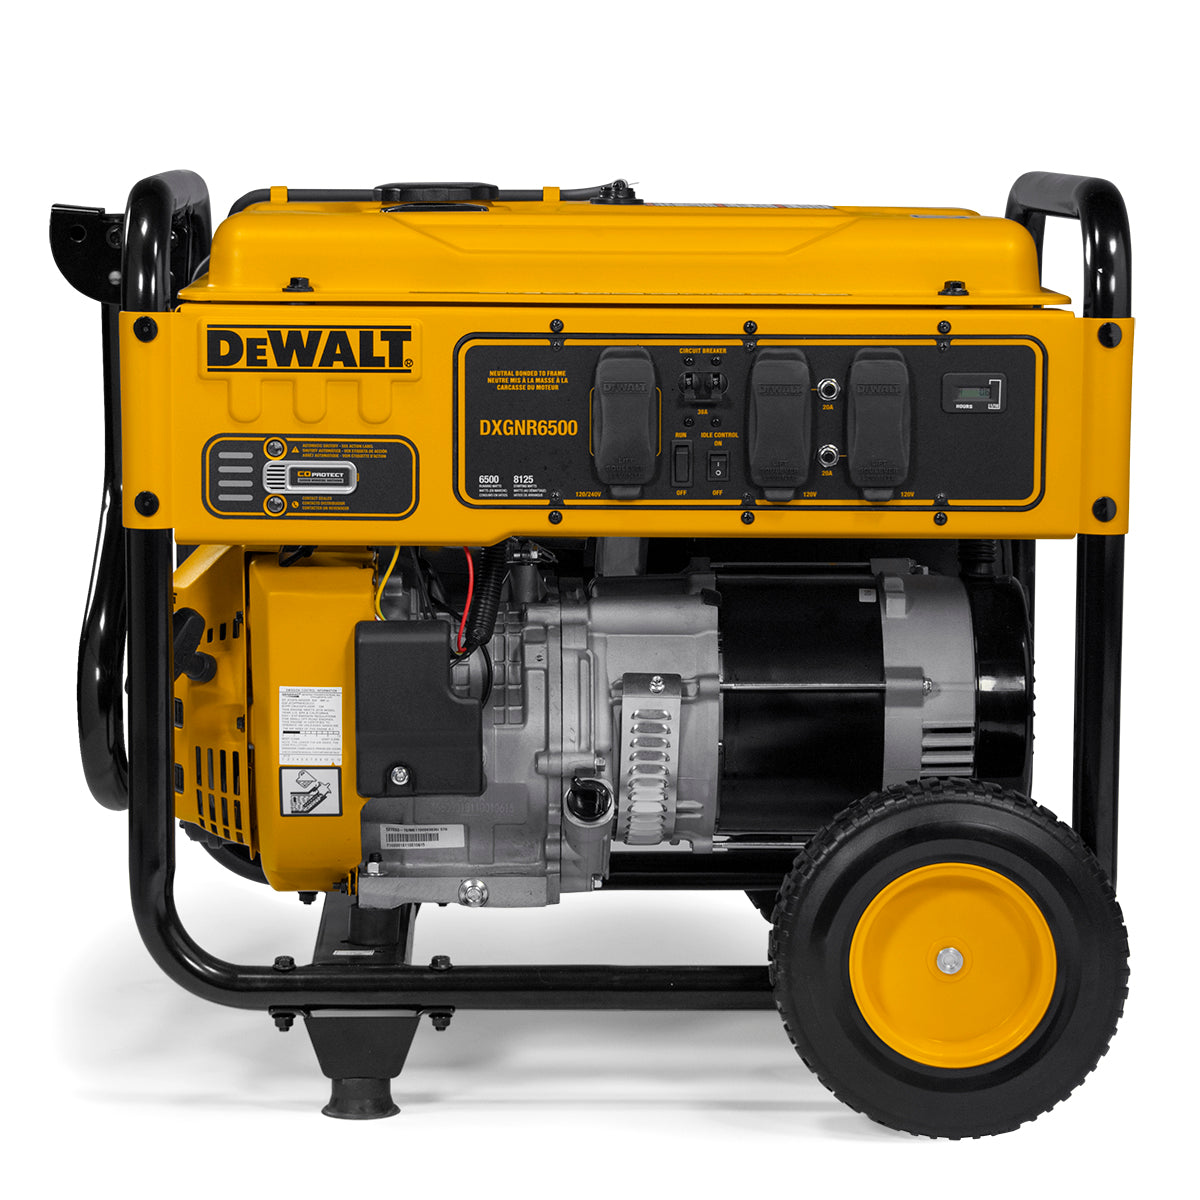 Dewalt PMC166500 DXGNR6500 6500 Watt Portable Gas Generator w/ CO-Protect